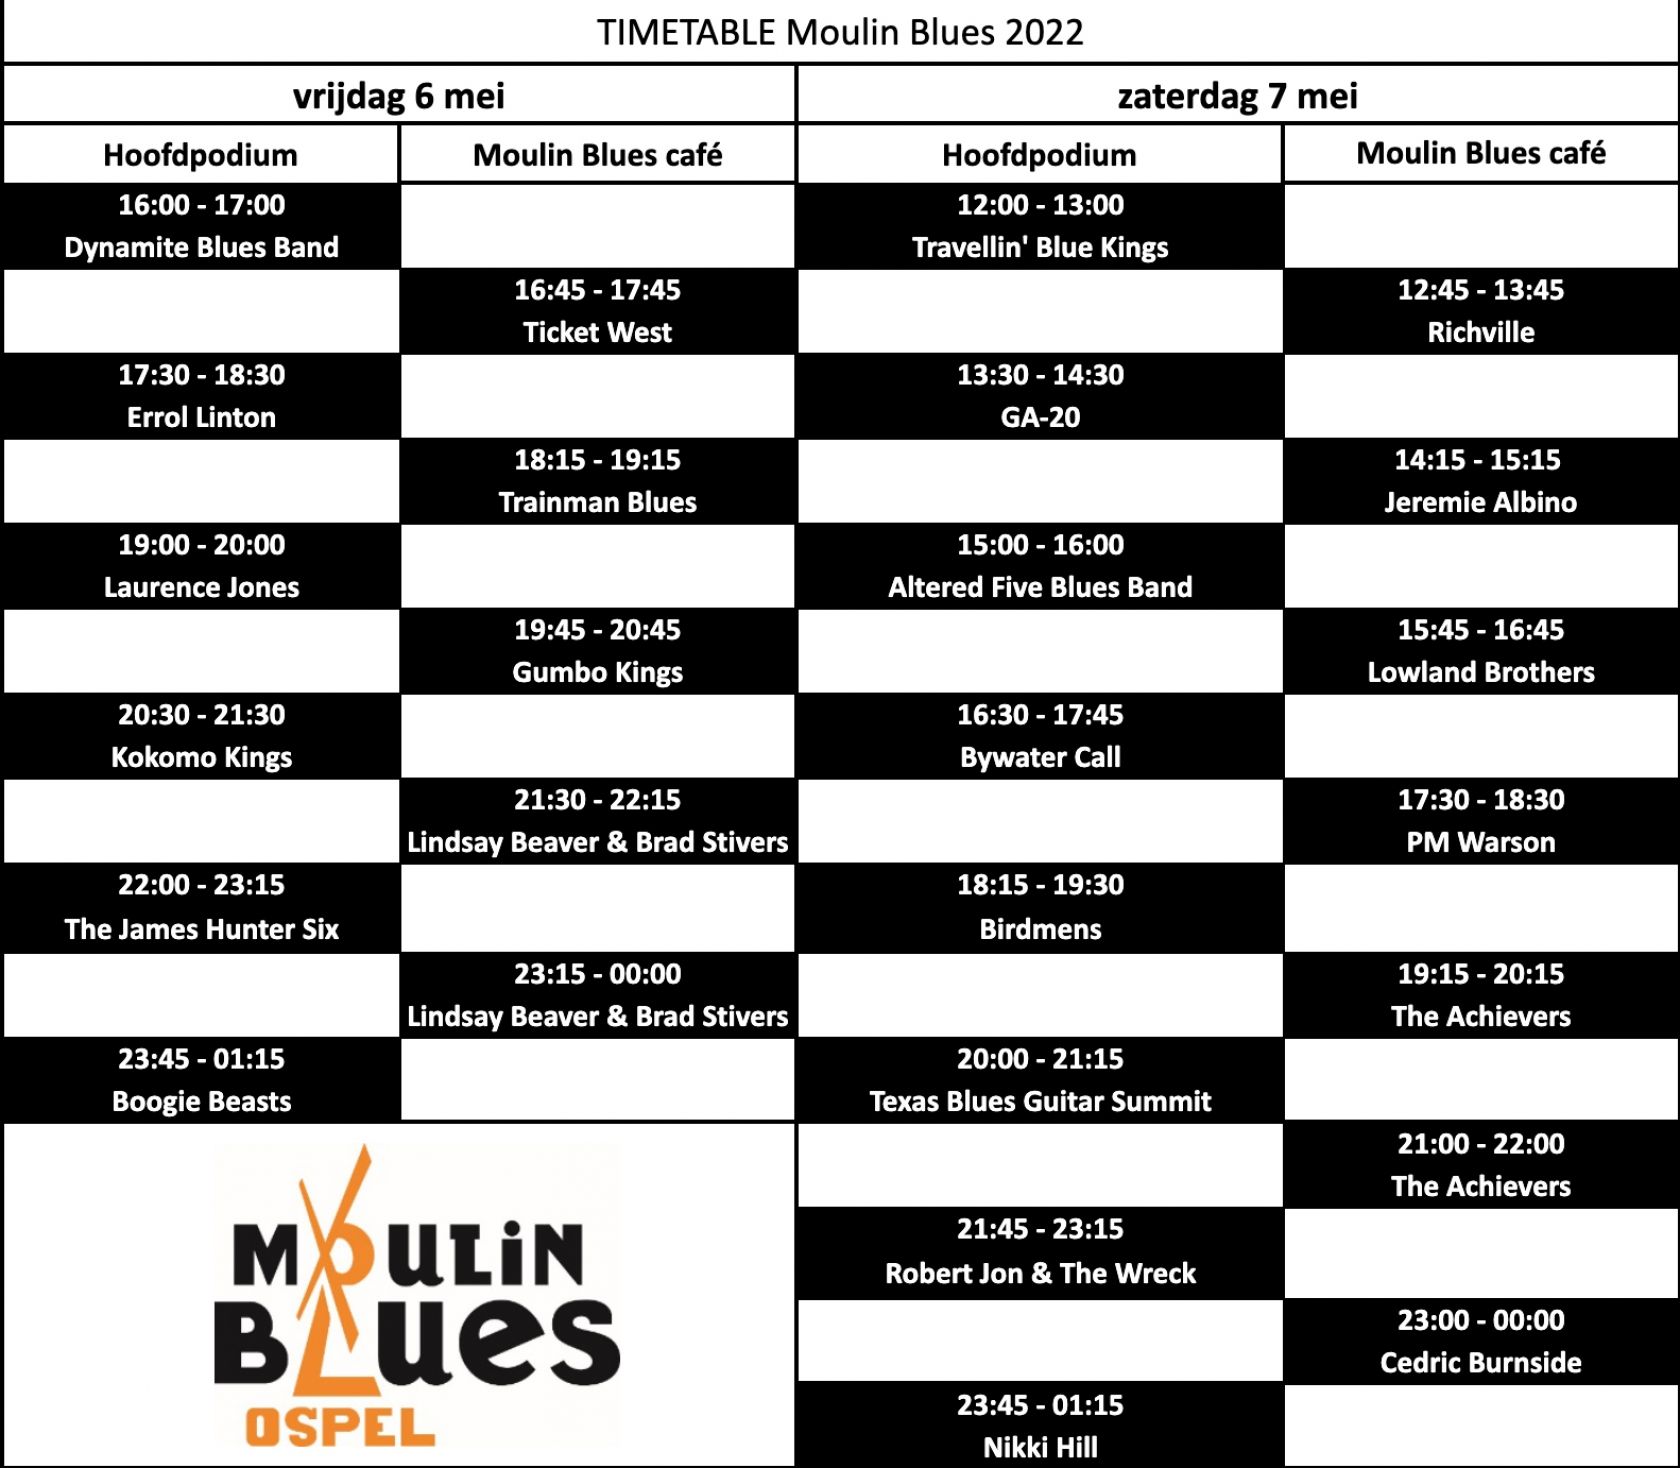 Timetable Moulin Blues 2022